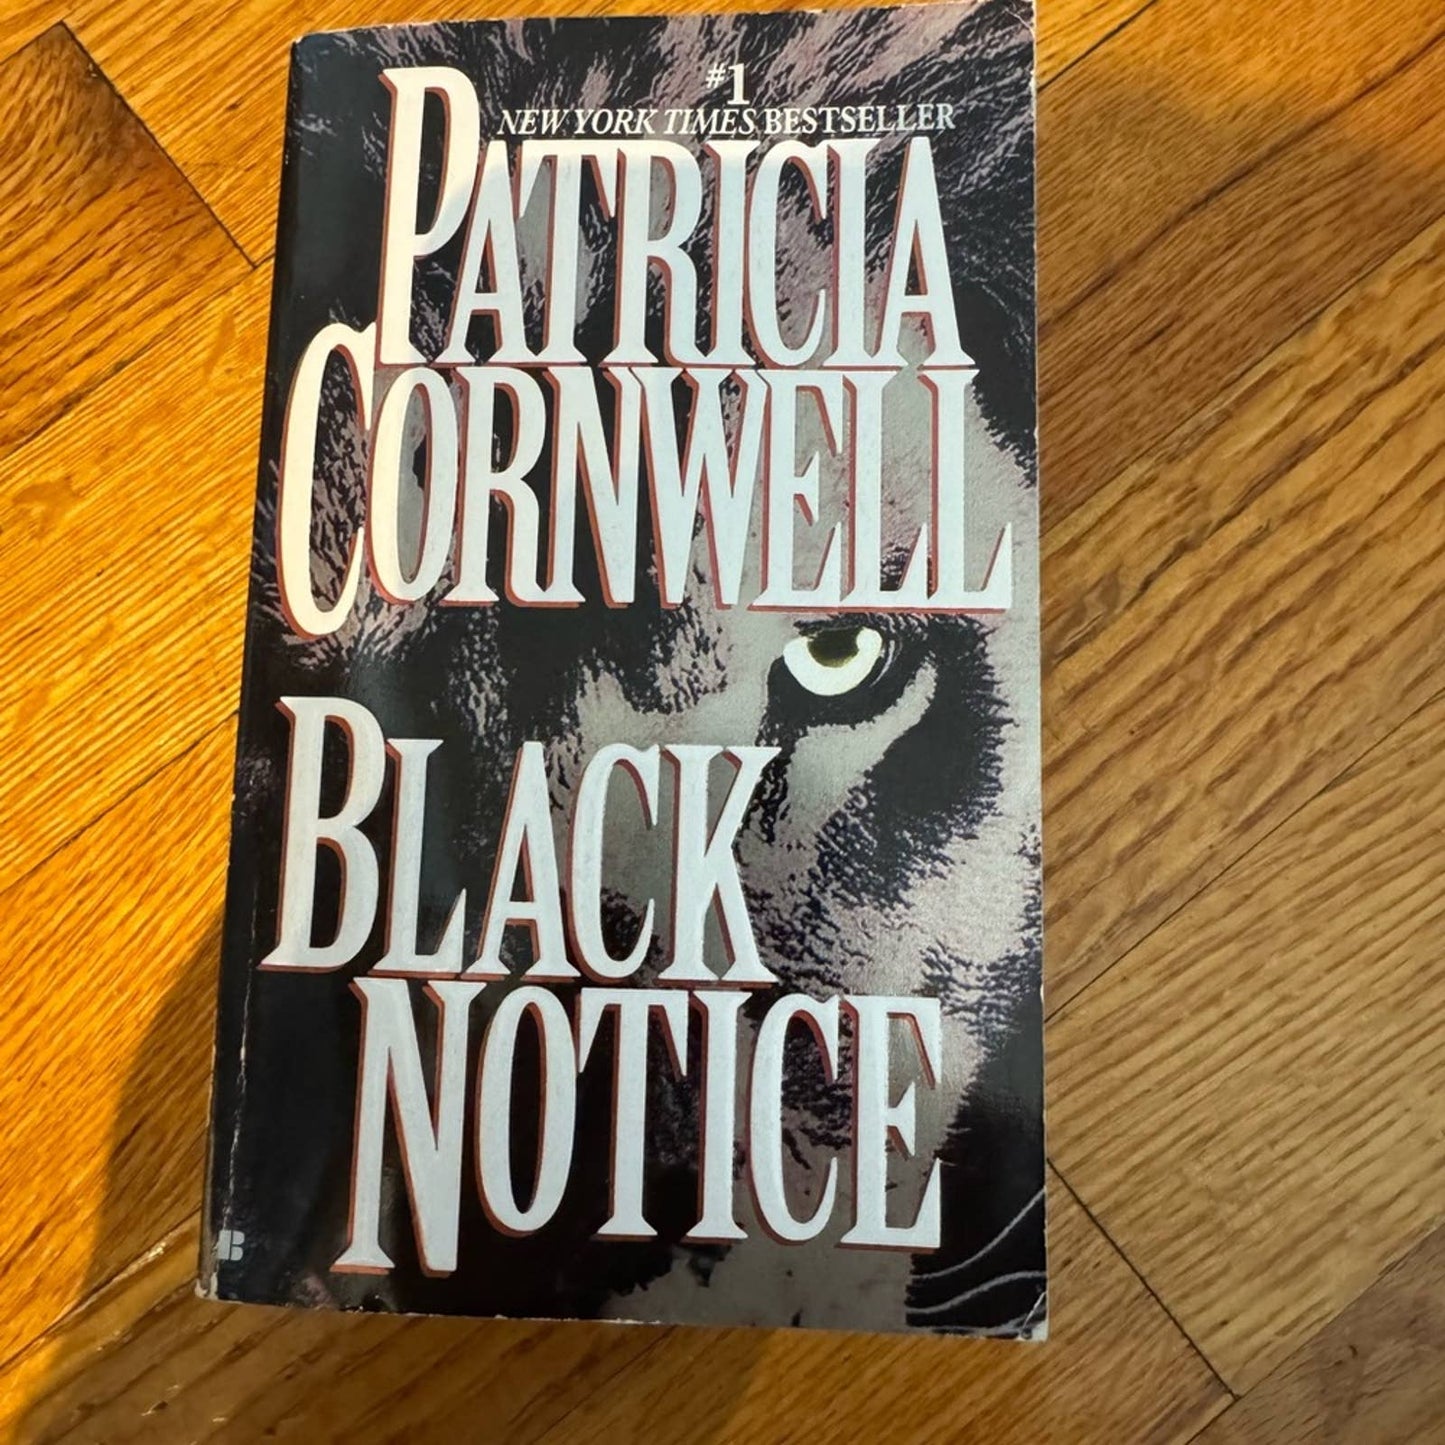 Black Notice by Patricia Cornell Paperback Book